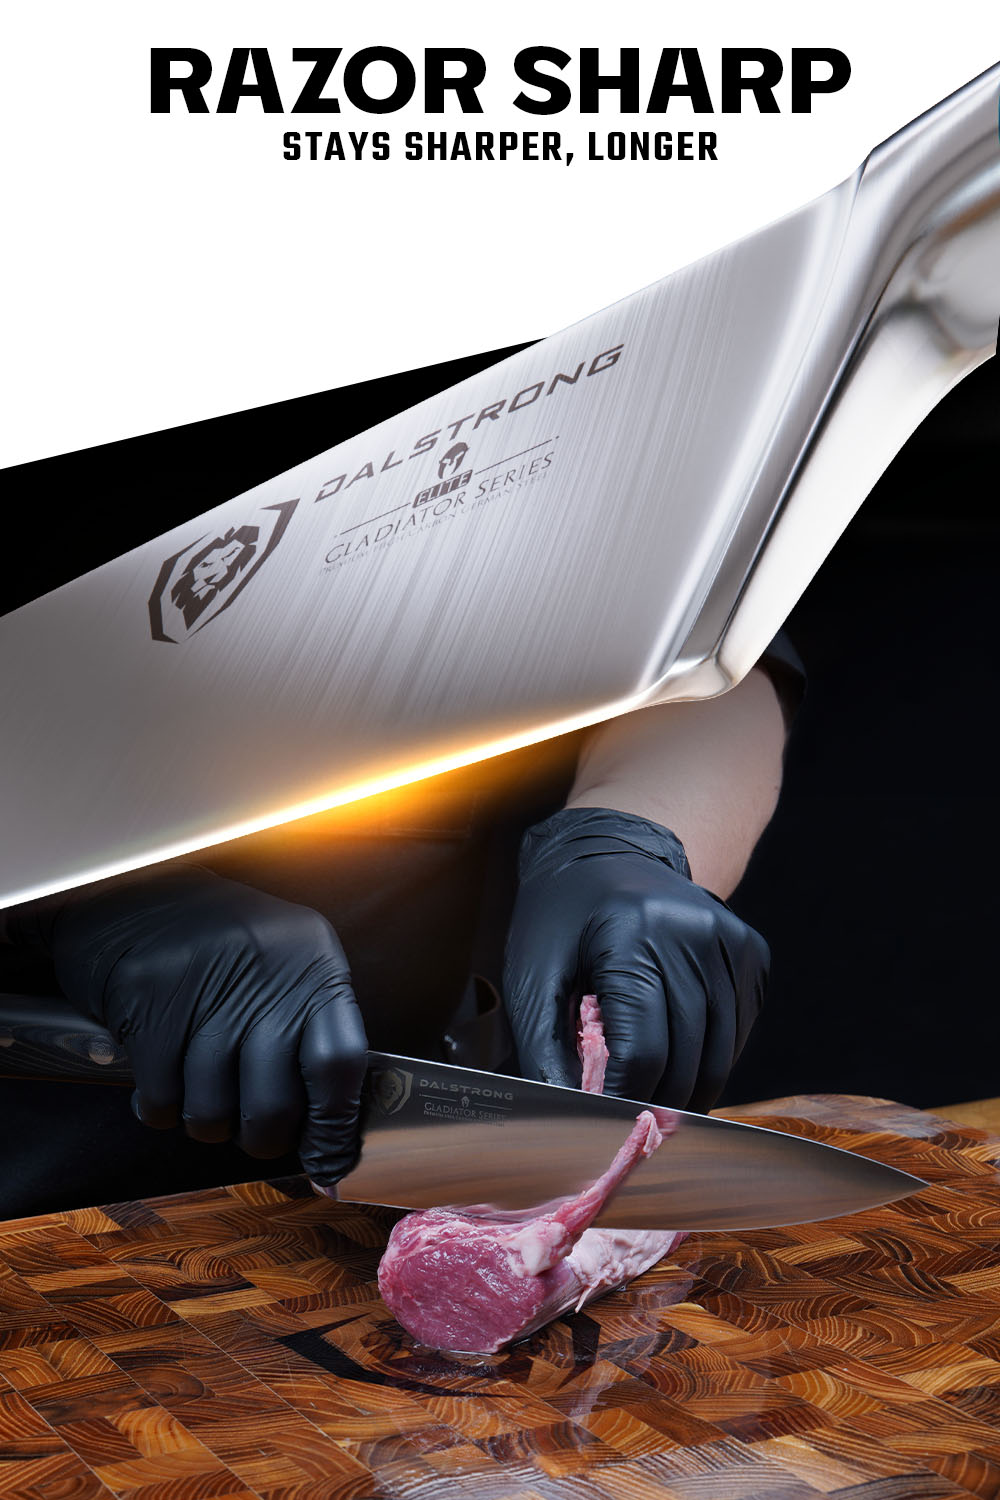 3-Piece Knife Set | Chef - Santoku - Paring | Gladiator Series Elite | NSF Certified | Dalstrong ©